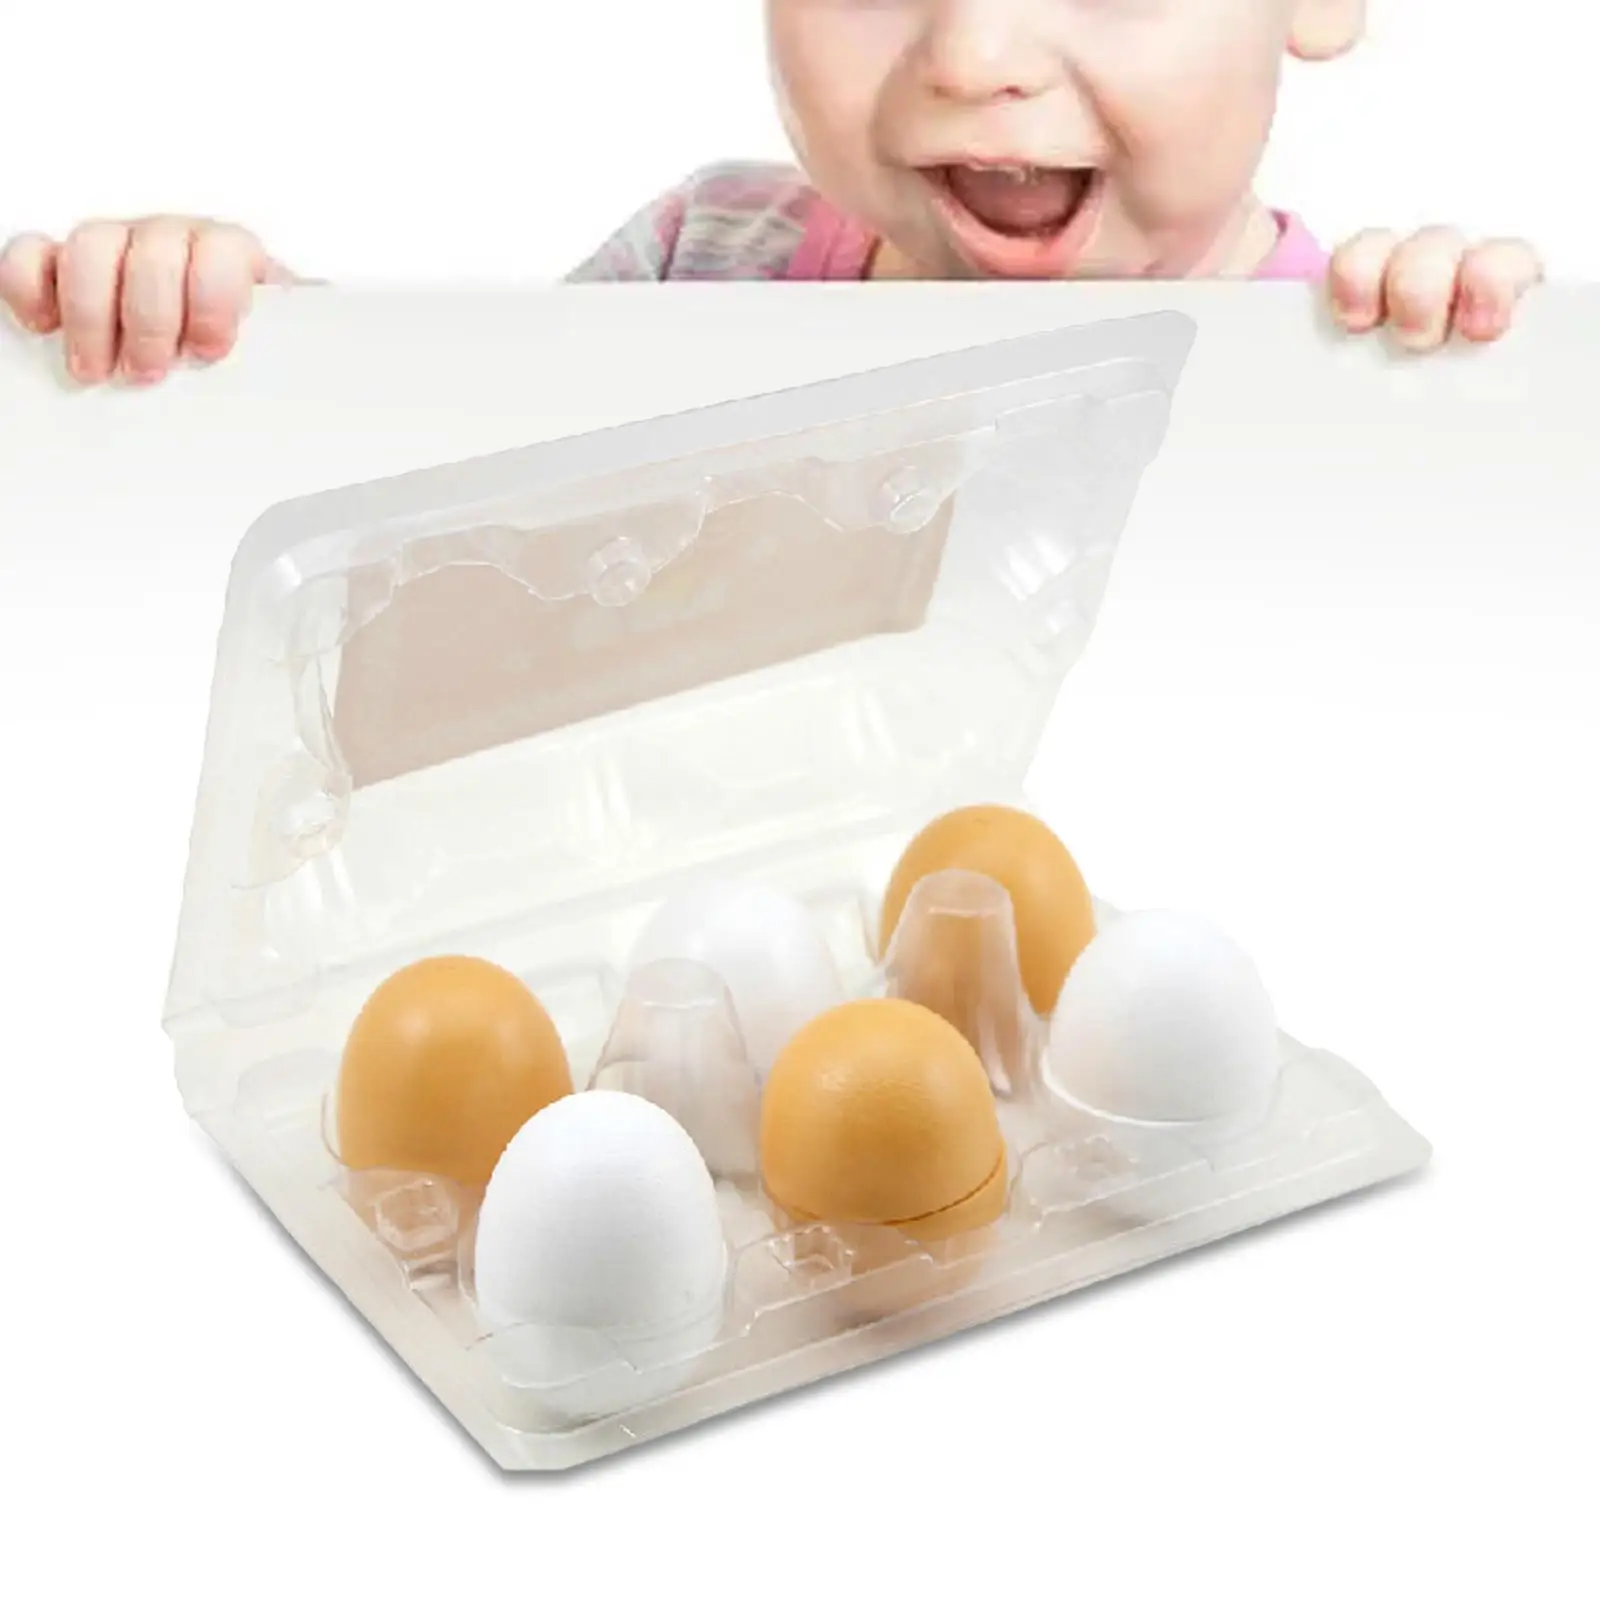 Simulation Wooden Eggs Toys Creative Home Decor Crafts Fake Eggs DIY Development Toy for Home Preschool Kitchen Children